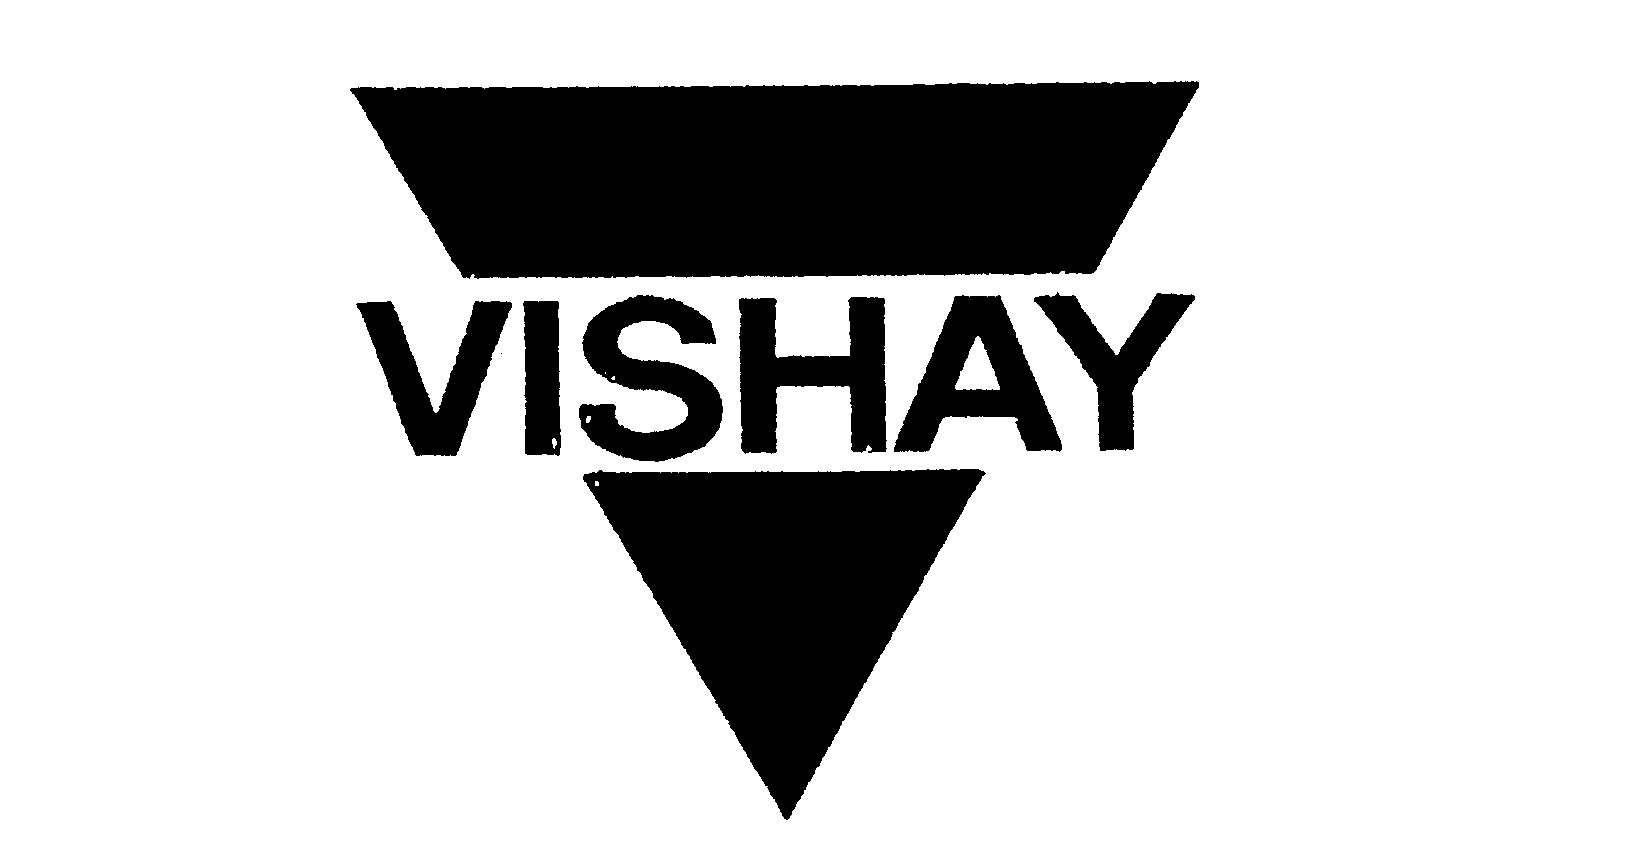  VISHAY